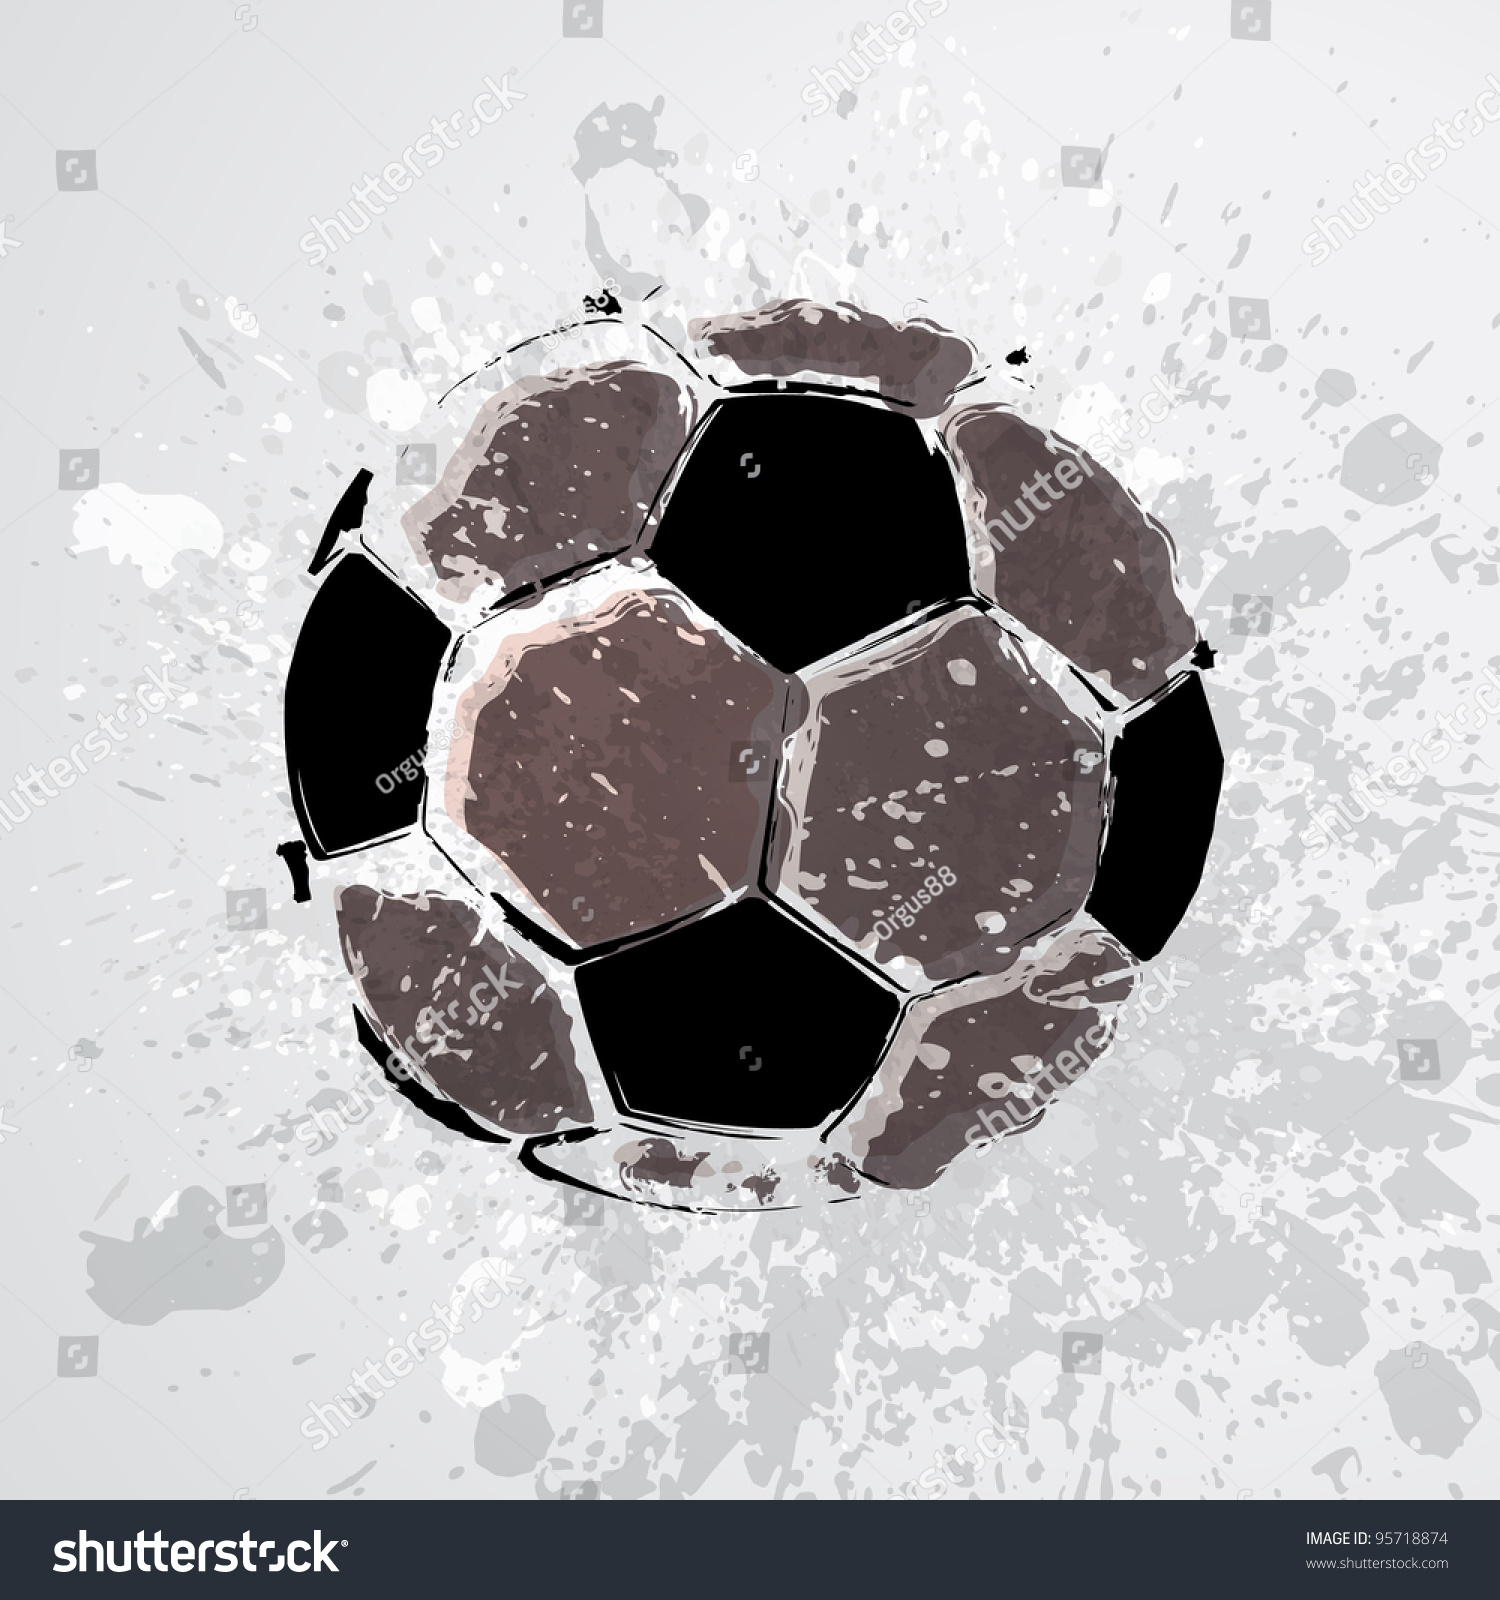 Vector Grunge Soccer Ball - 95718874 : Shutterstock